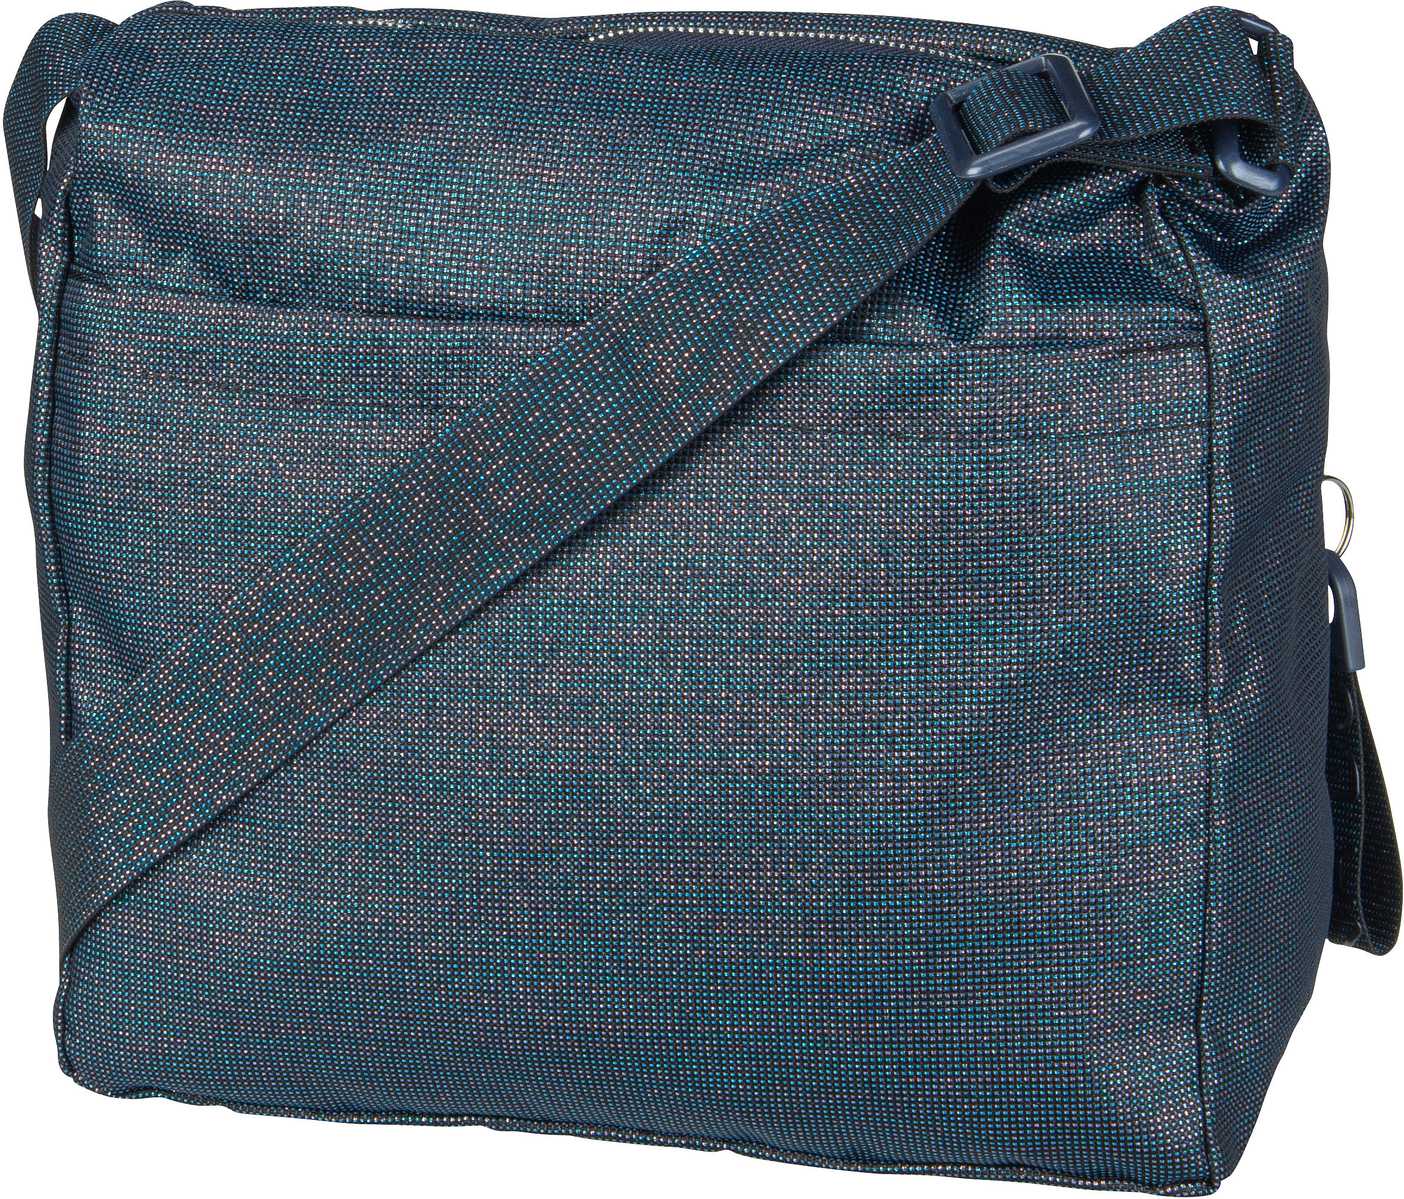 Mandarina Duck MD20 Lux Crossover Bag QNTT4 - Black Pearl